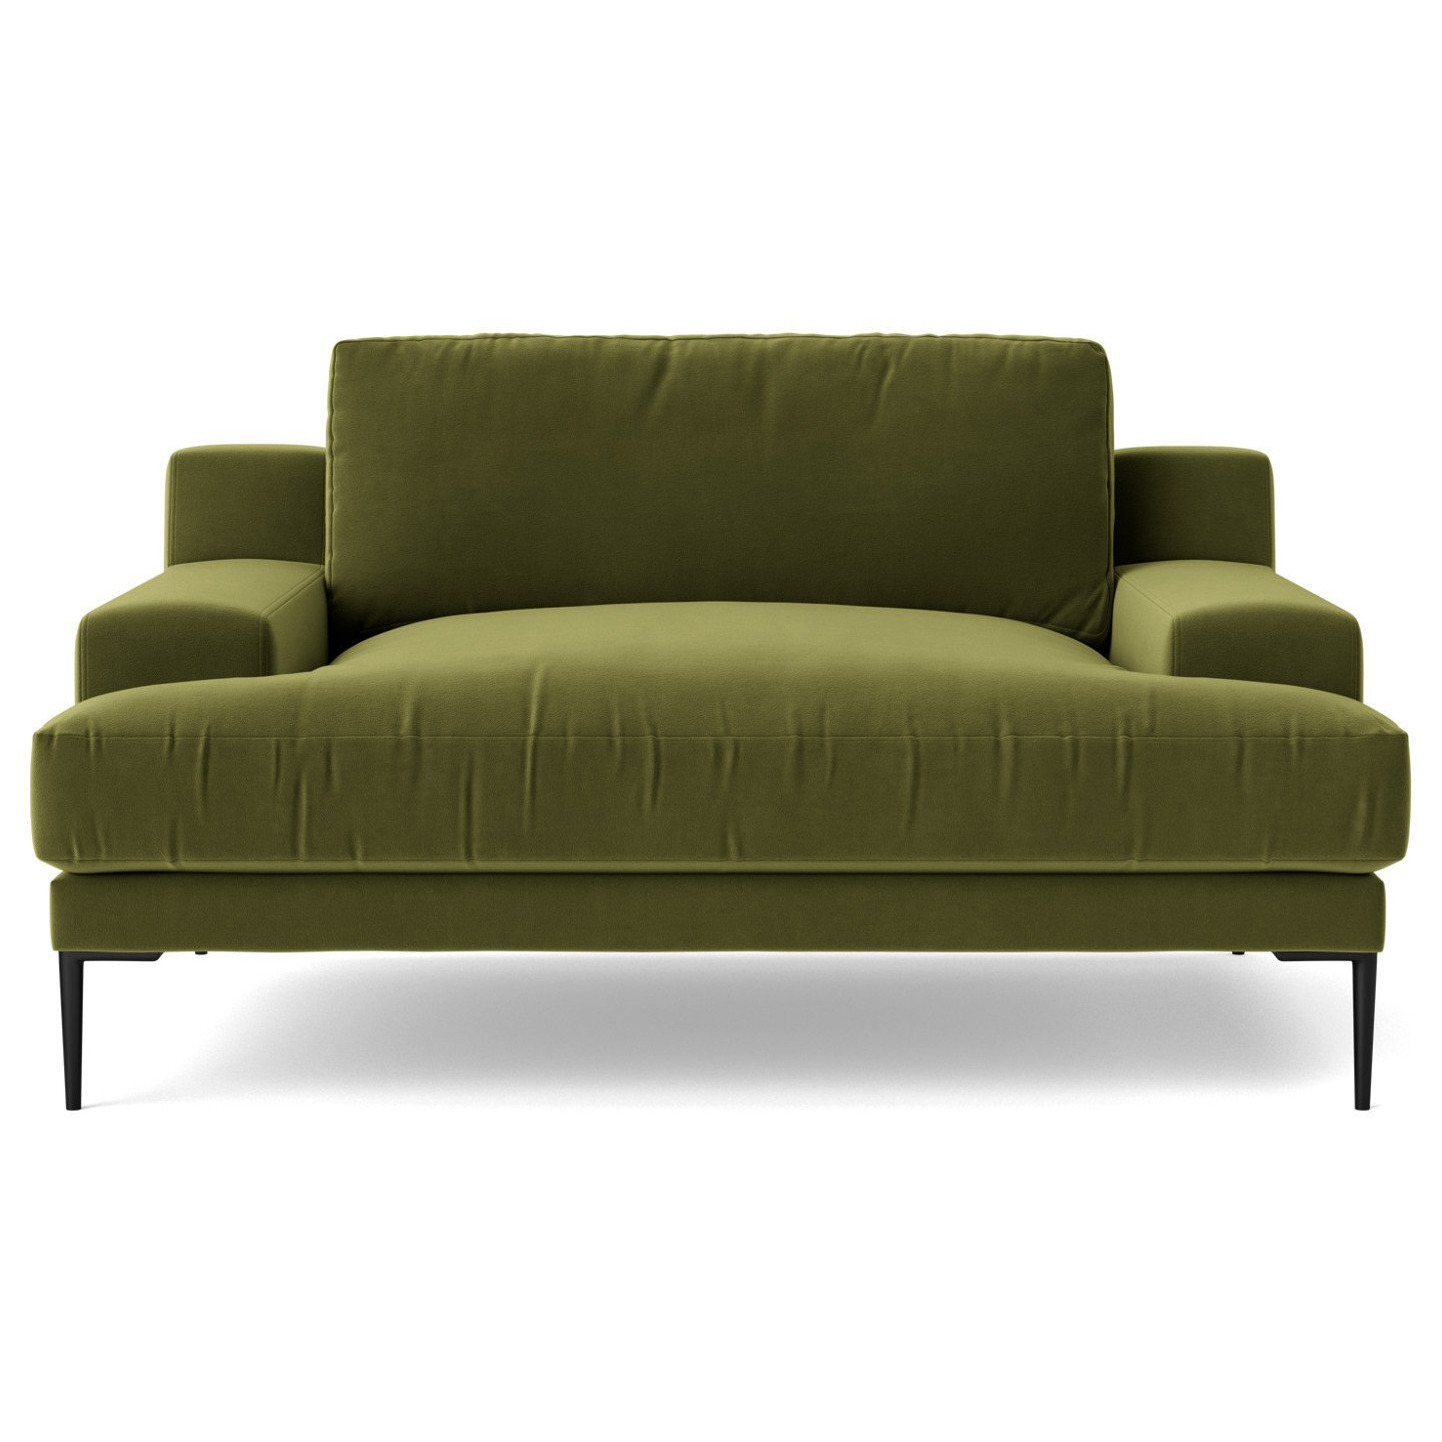 Swoon Almera Velvet Cuddle Chair - Fern Green - image 1